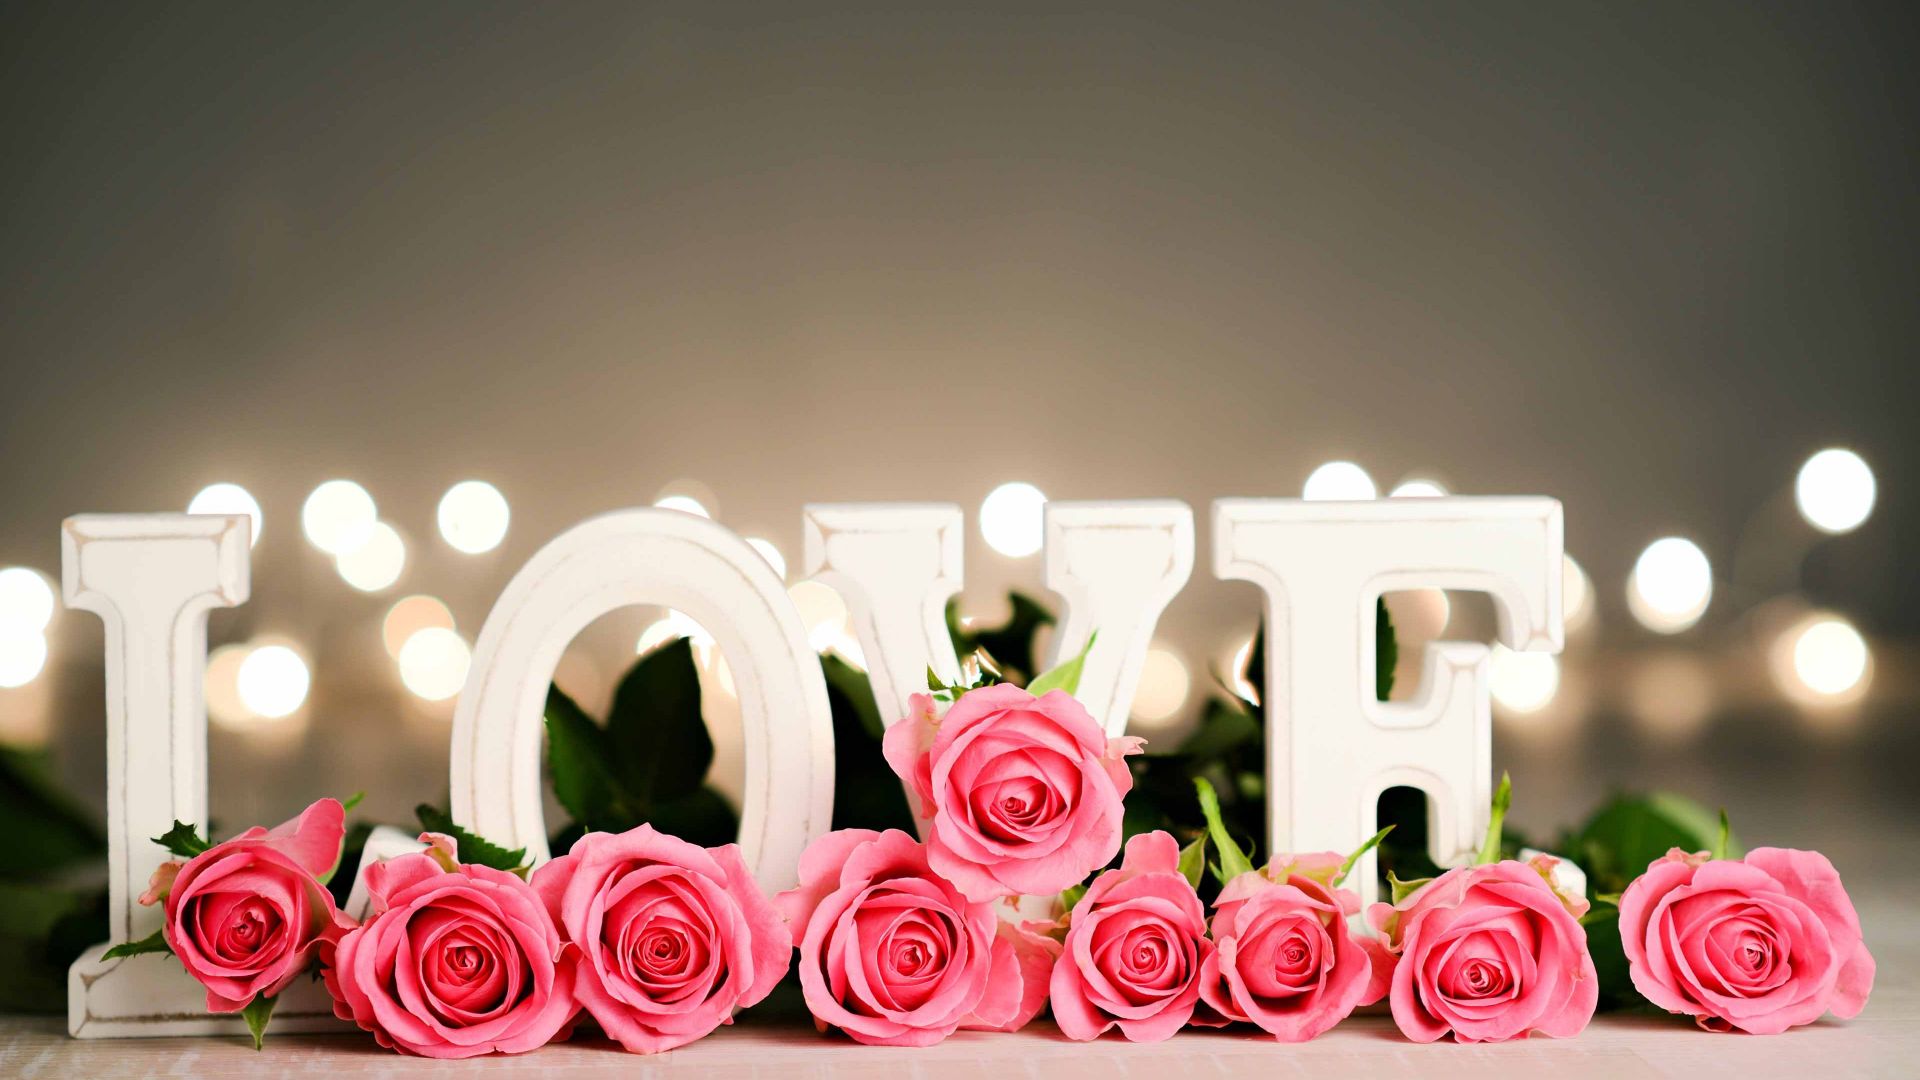 фото любовь, love image, rose, flower, 4k (horizontal)